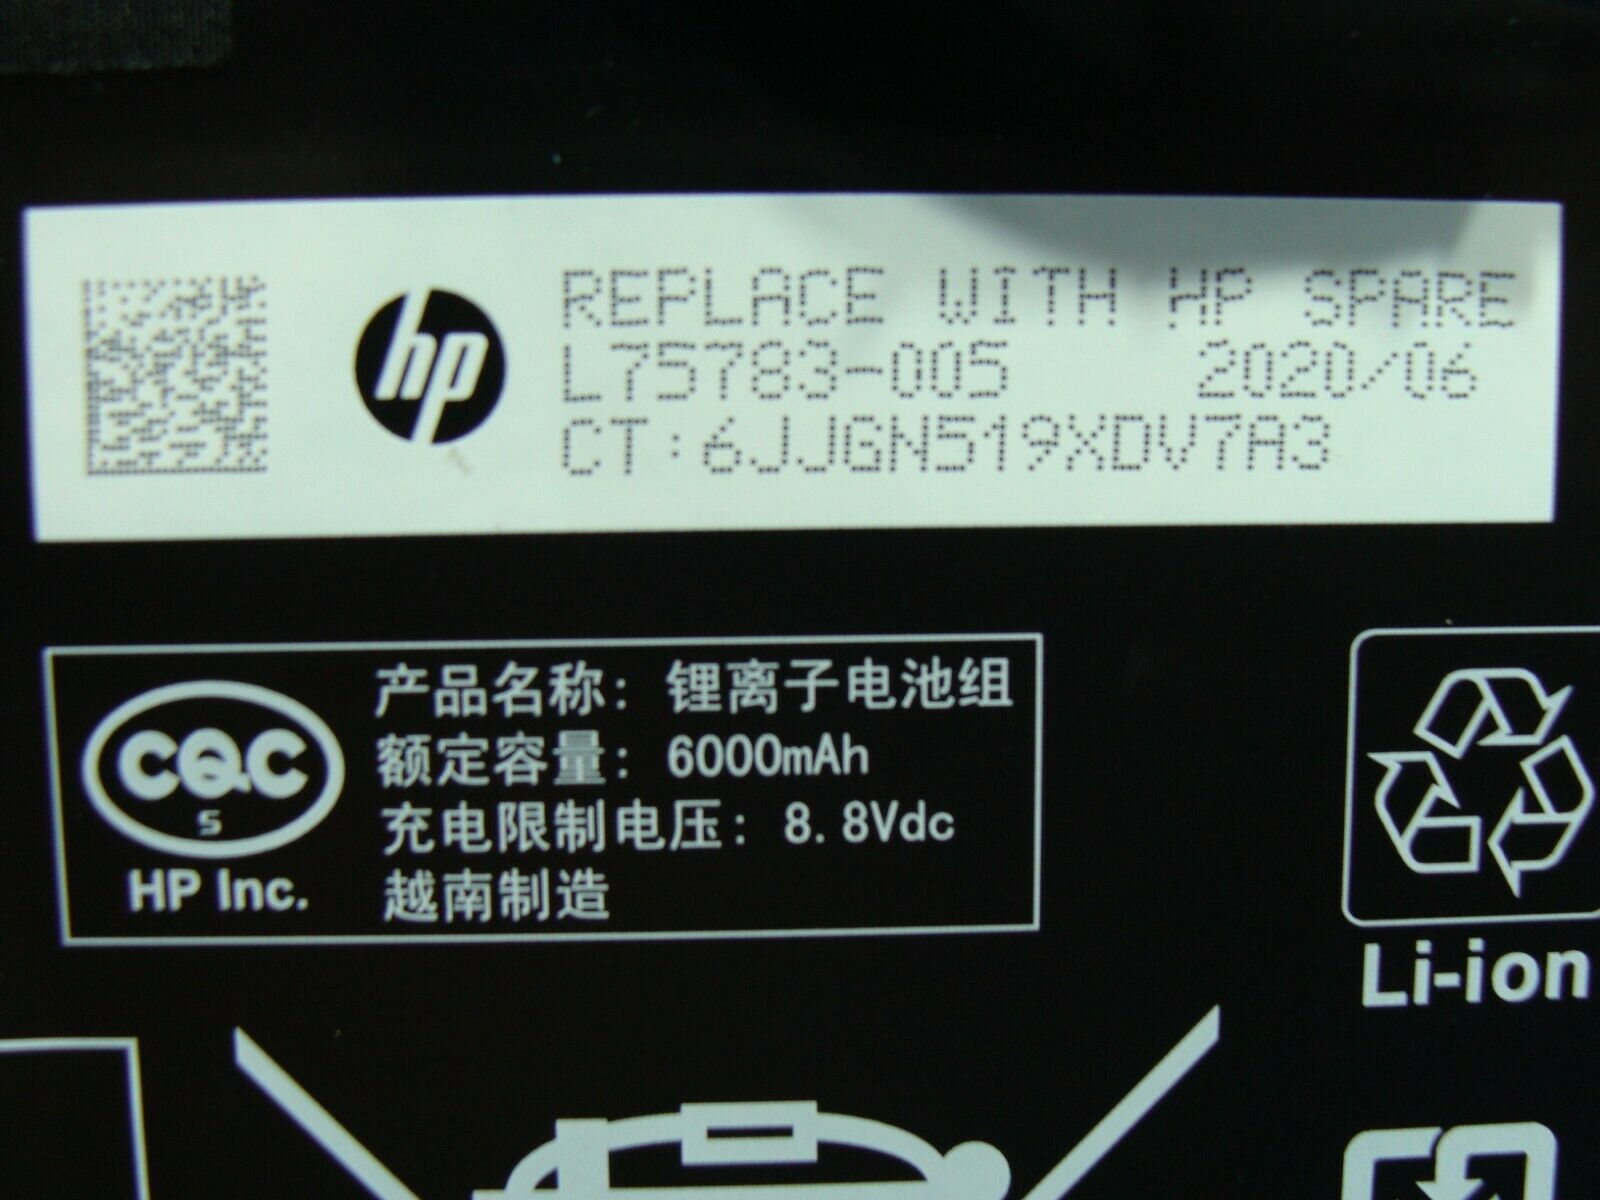 HP Chromebook X360 11.6